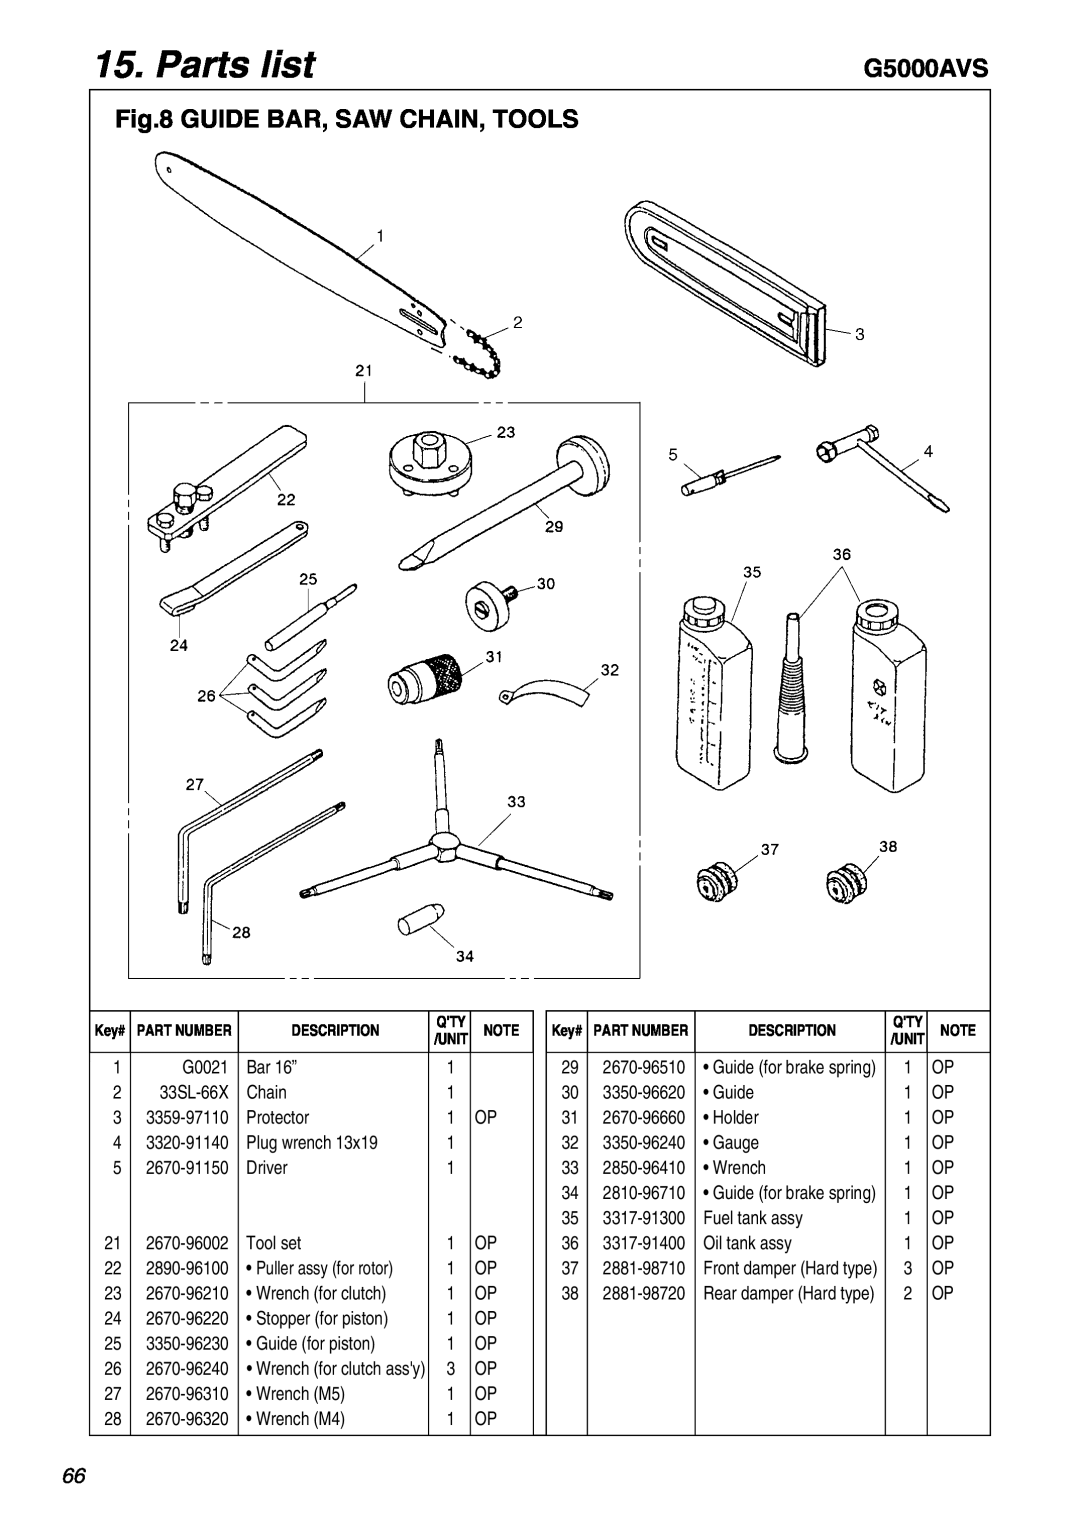 Zenoah G5000AVS manual Guide Bar, Saw Chain, Tools, Parts list, 3359-97110 